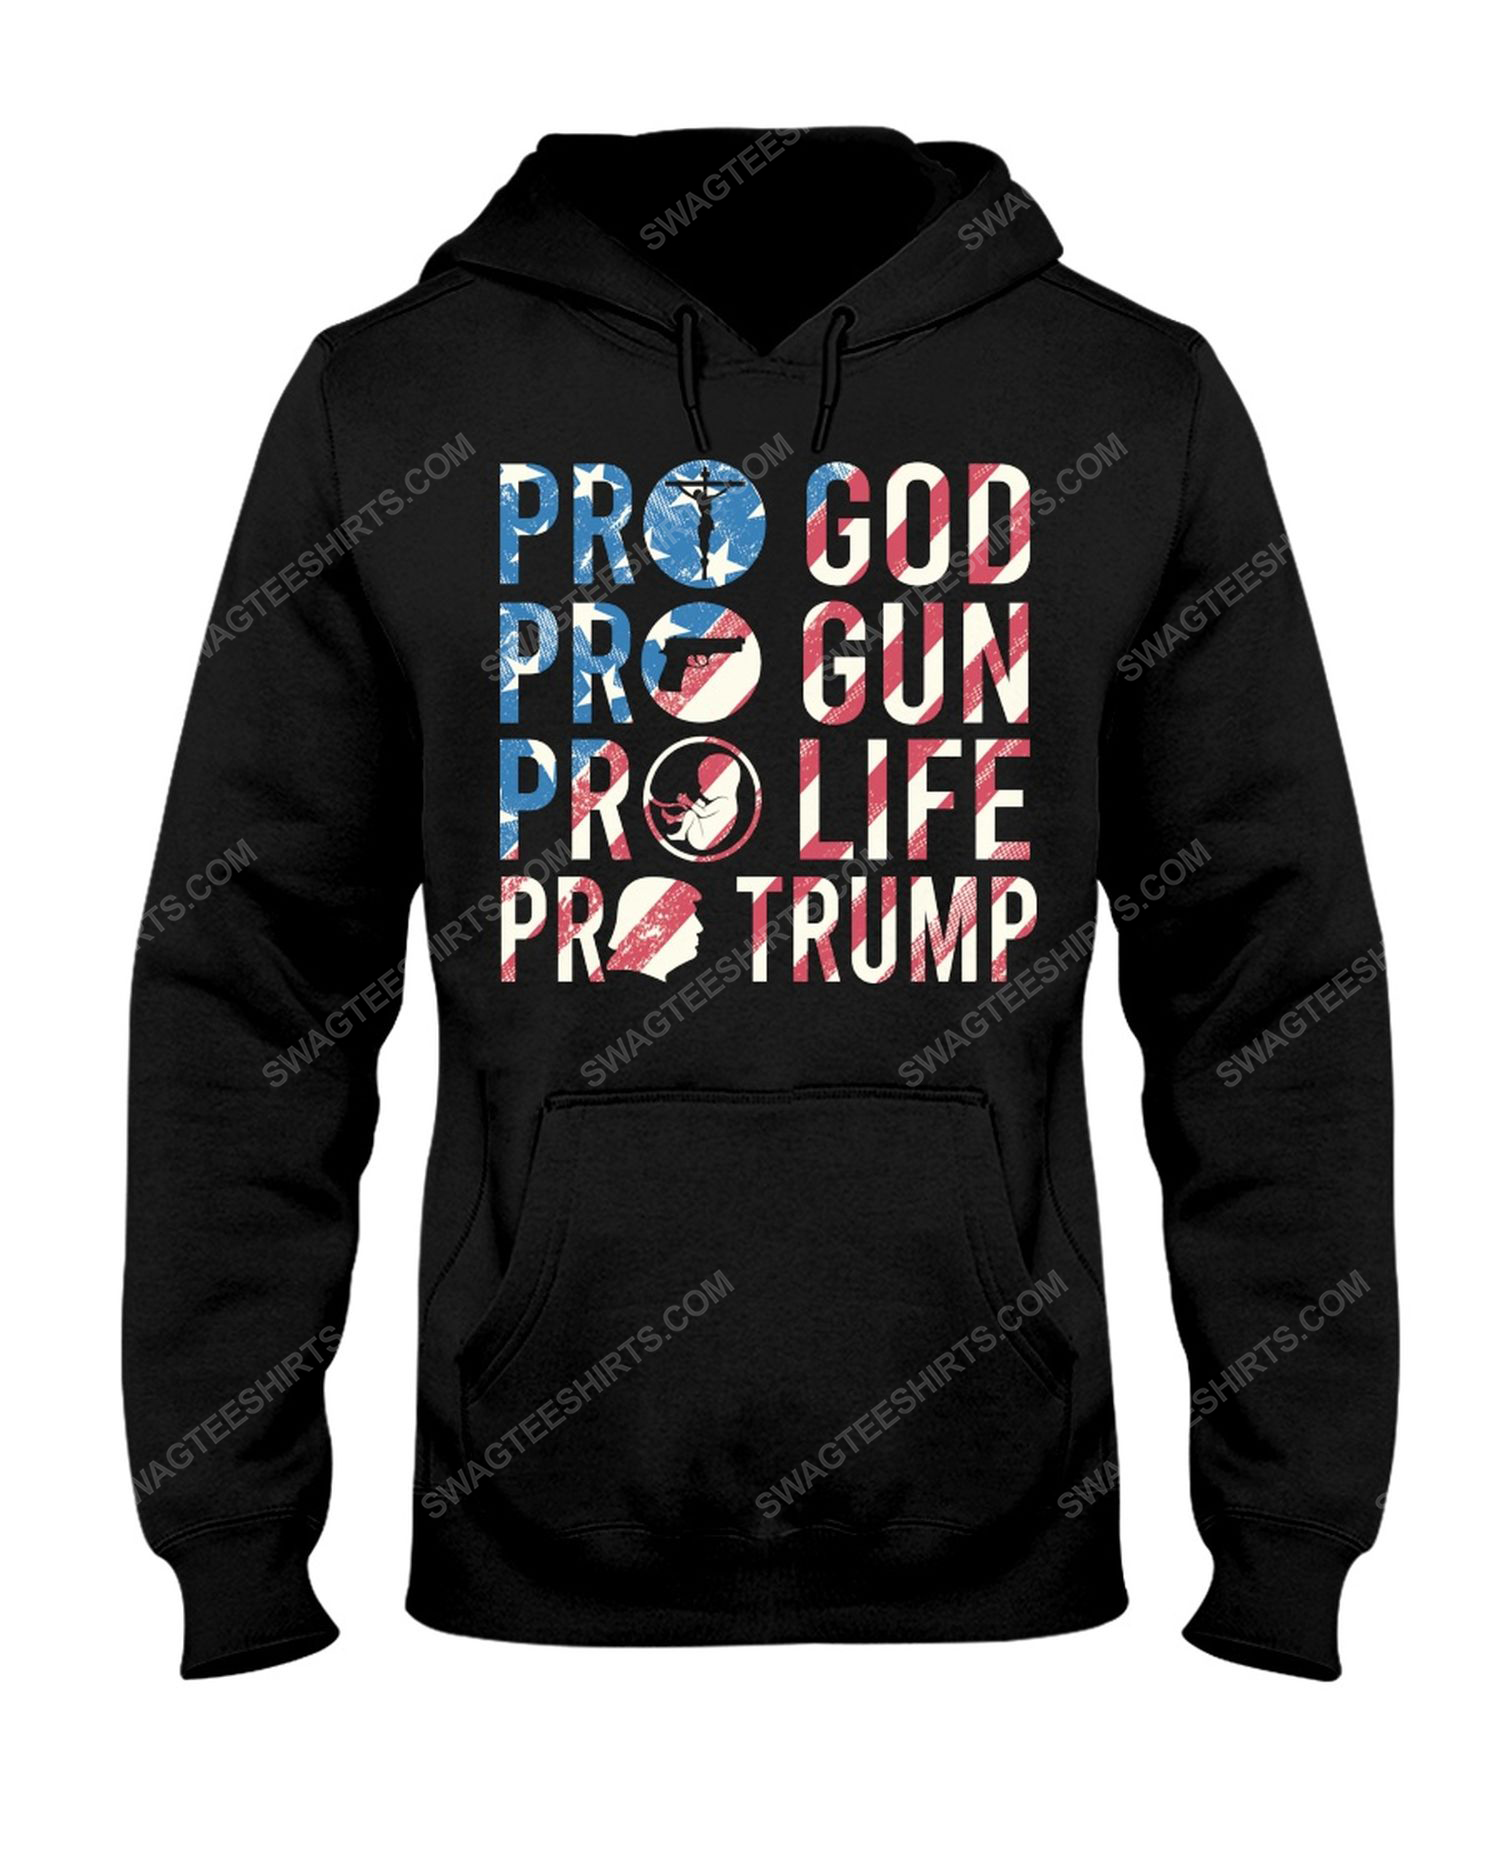 Pro God pro gun pro life pro trump political hoodie